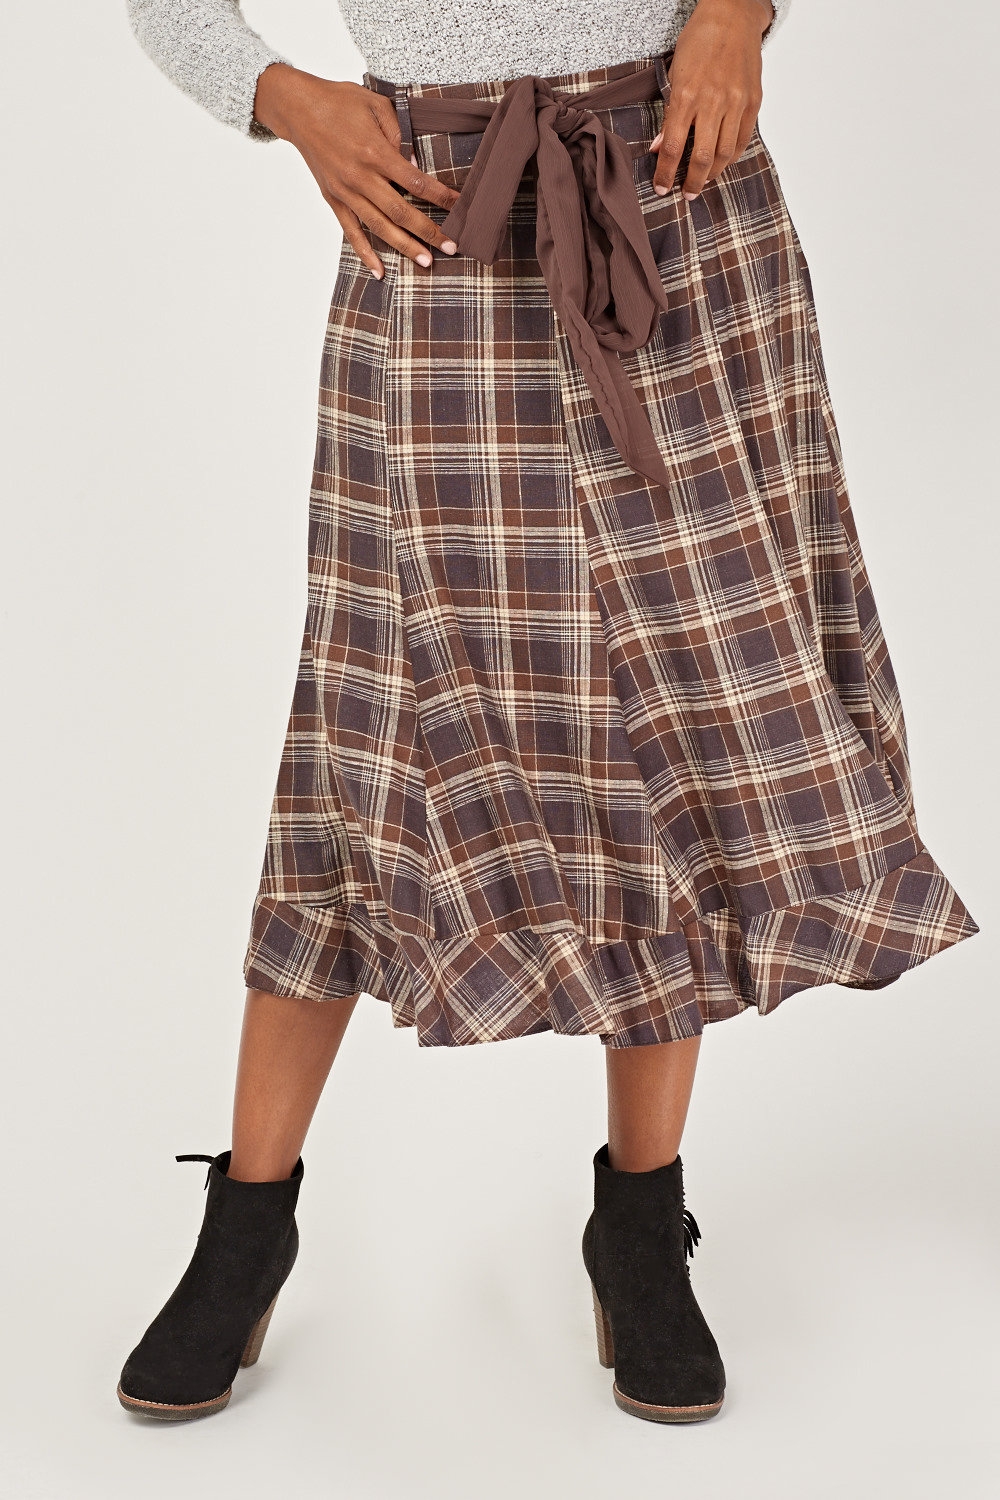 Ruffle Hem Flared Plaid Skirt - Just $7